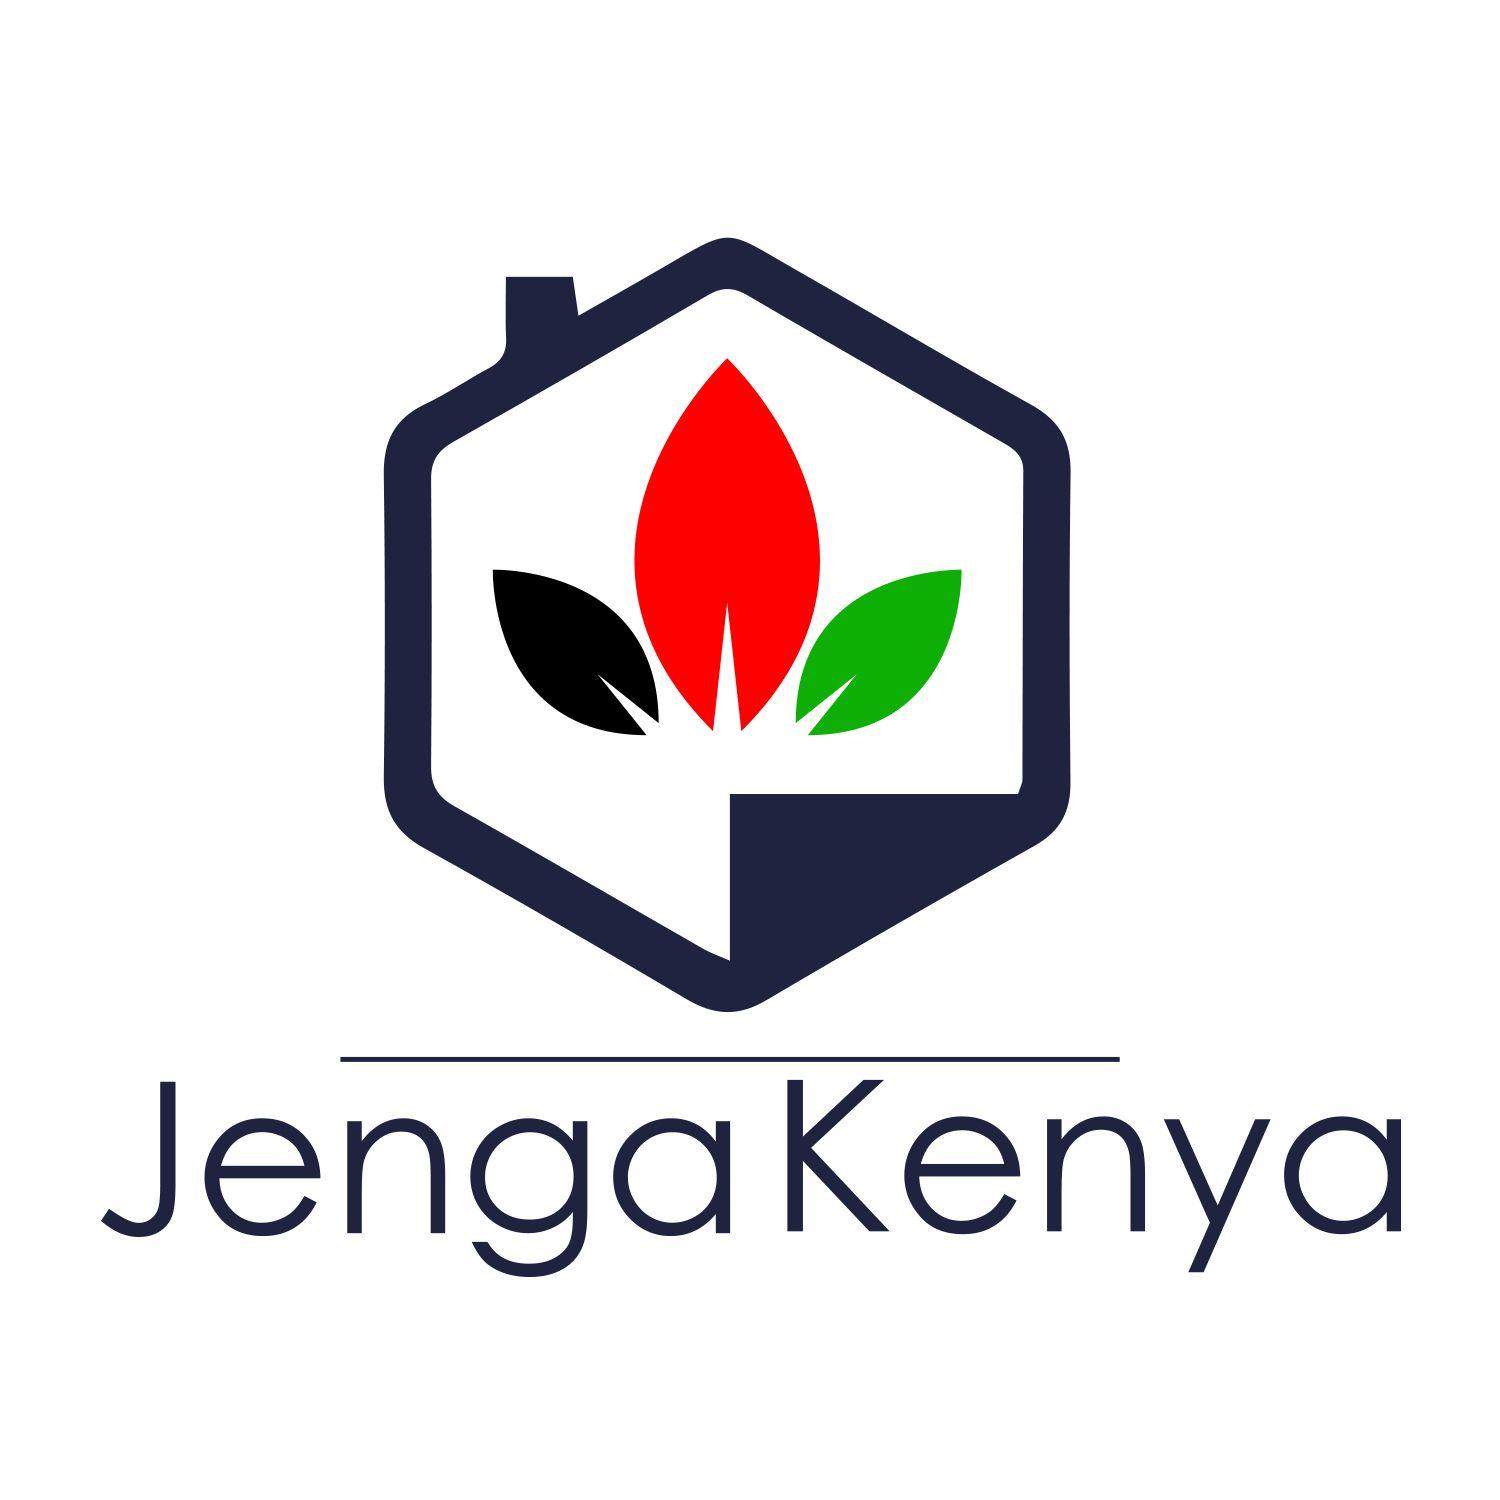 Jenga Logo - Modern, Colorful, Charity Logo Design for Jenga Kenya by Chris ...